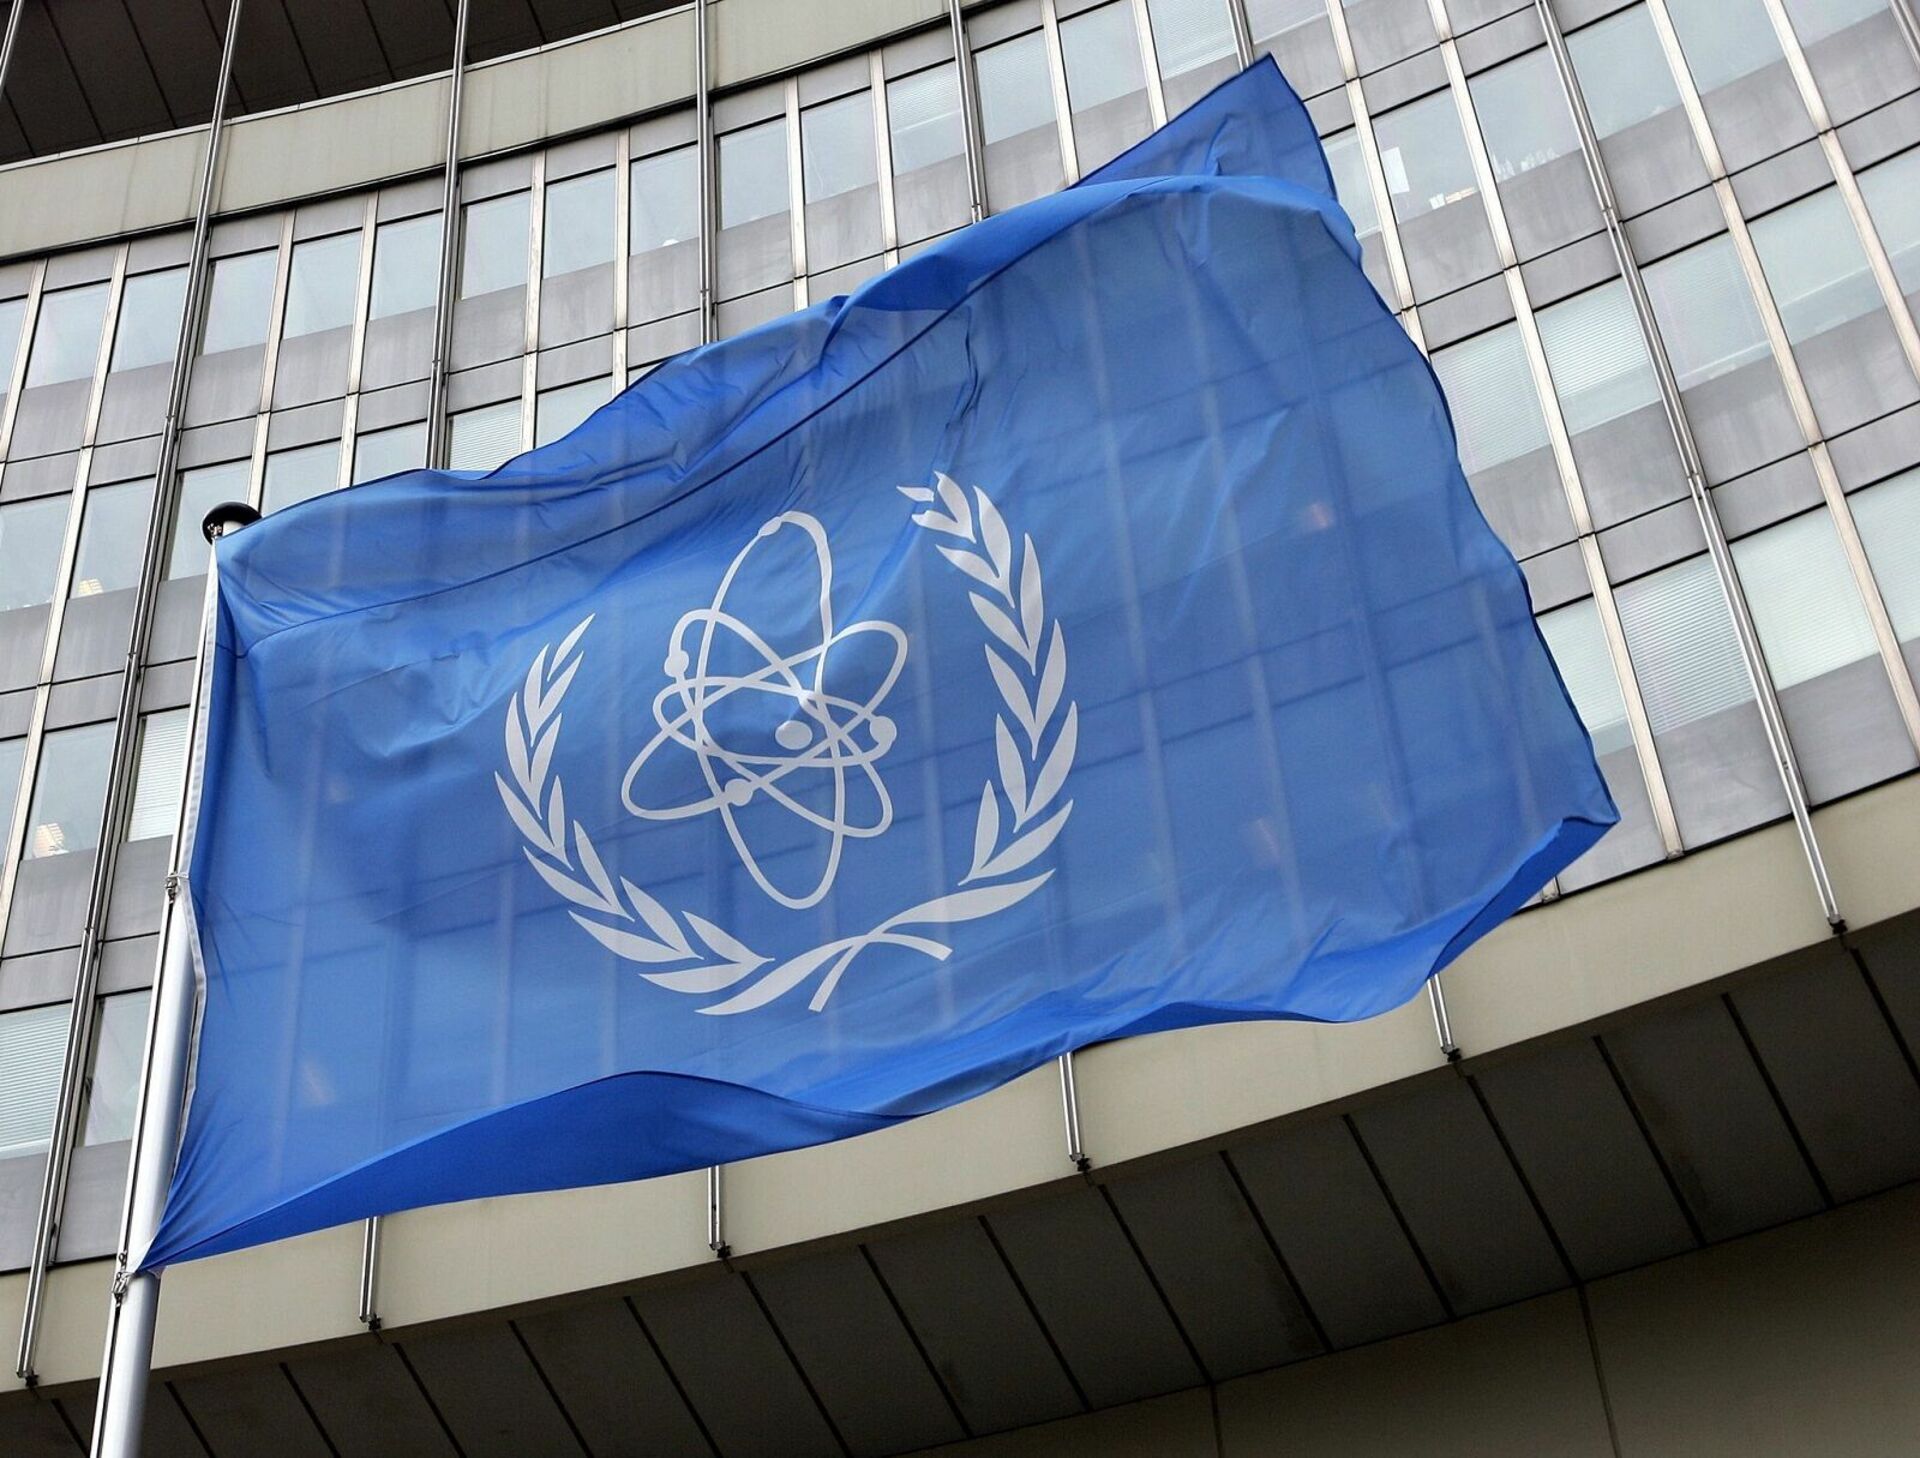 Организация магатэ занимается. ООН МАГАТЭ. Флаг МАГАТЭ. МАГАТЭ Вена. Международное агентство по атомной энергии (МАГАТЭ).